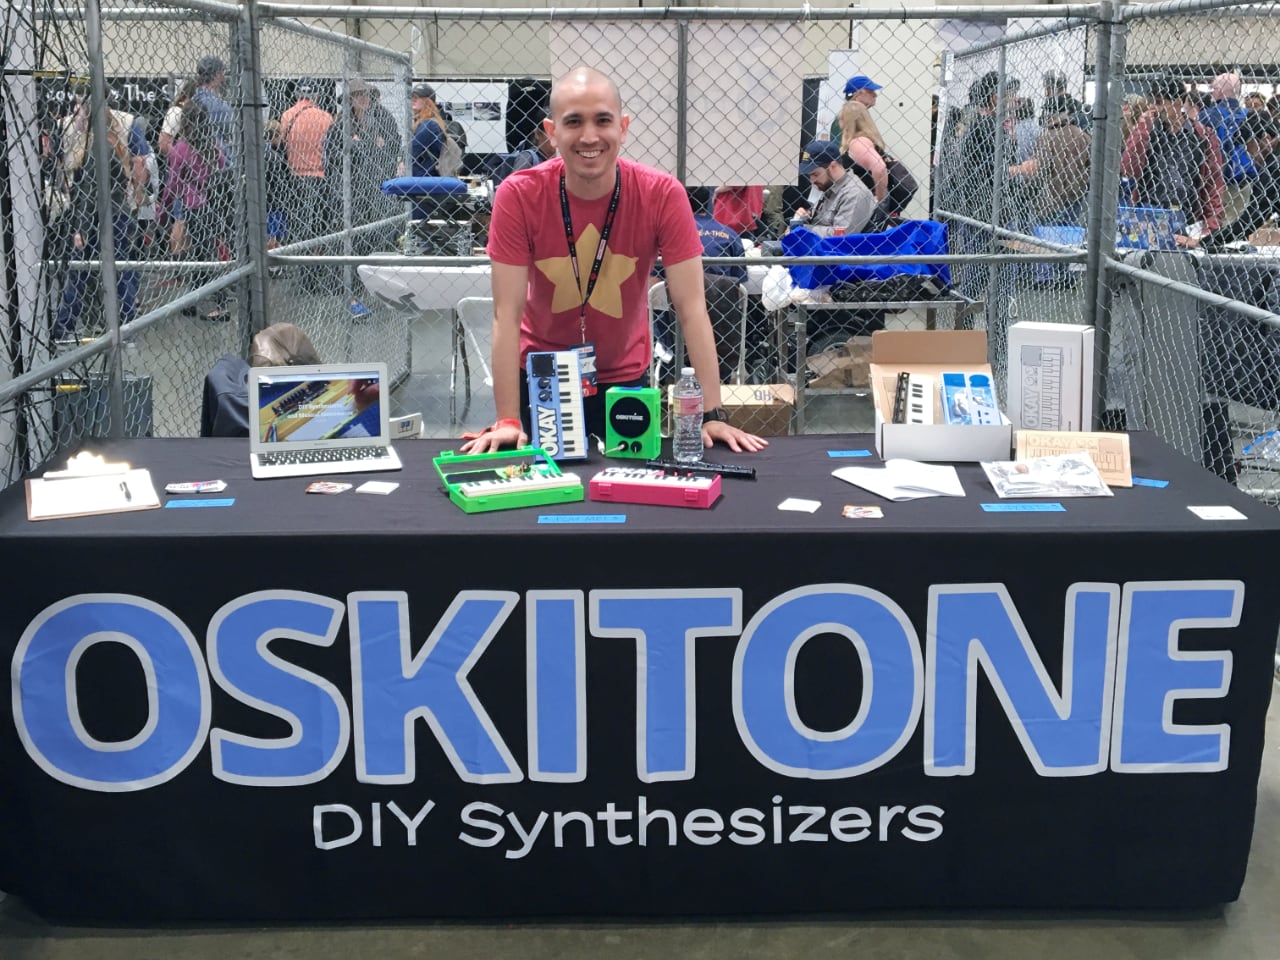 Oskitone at Maker Faire